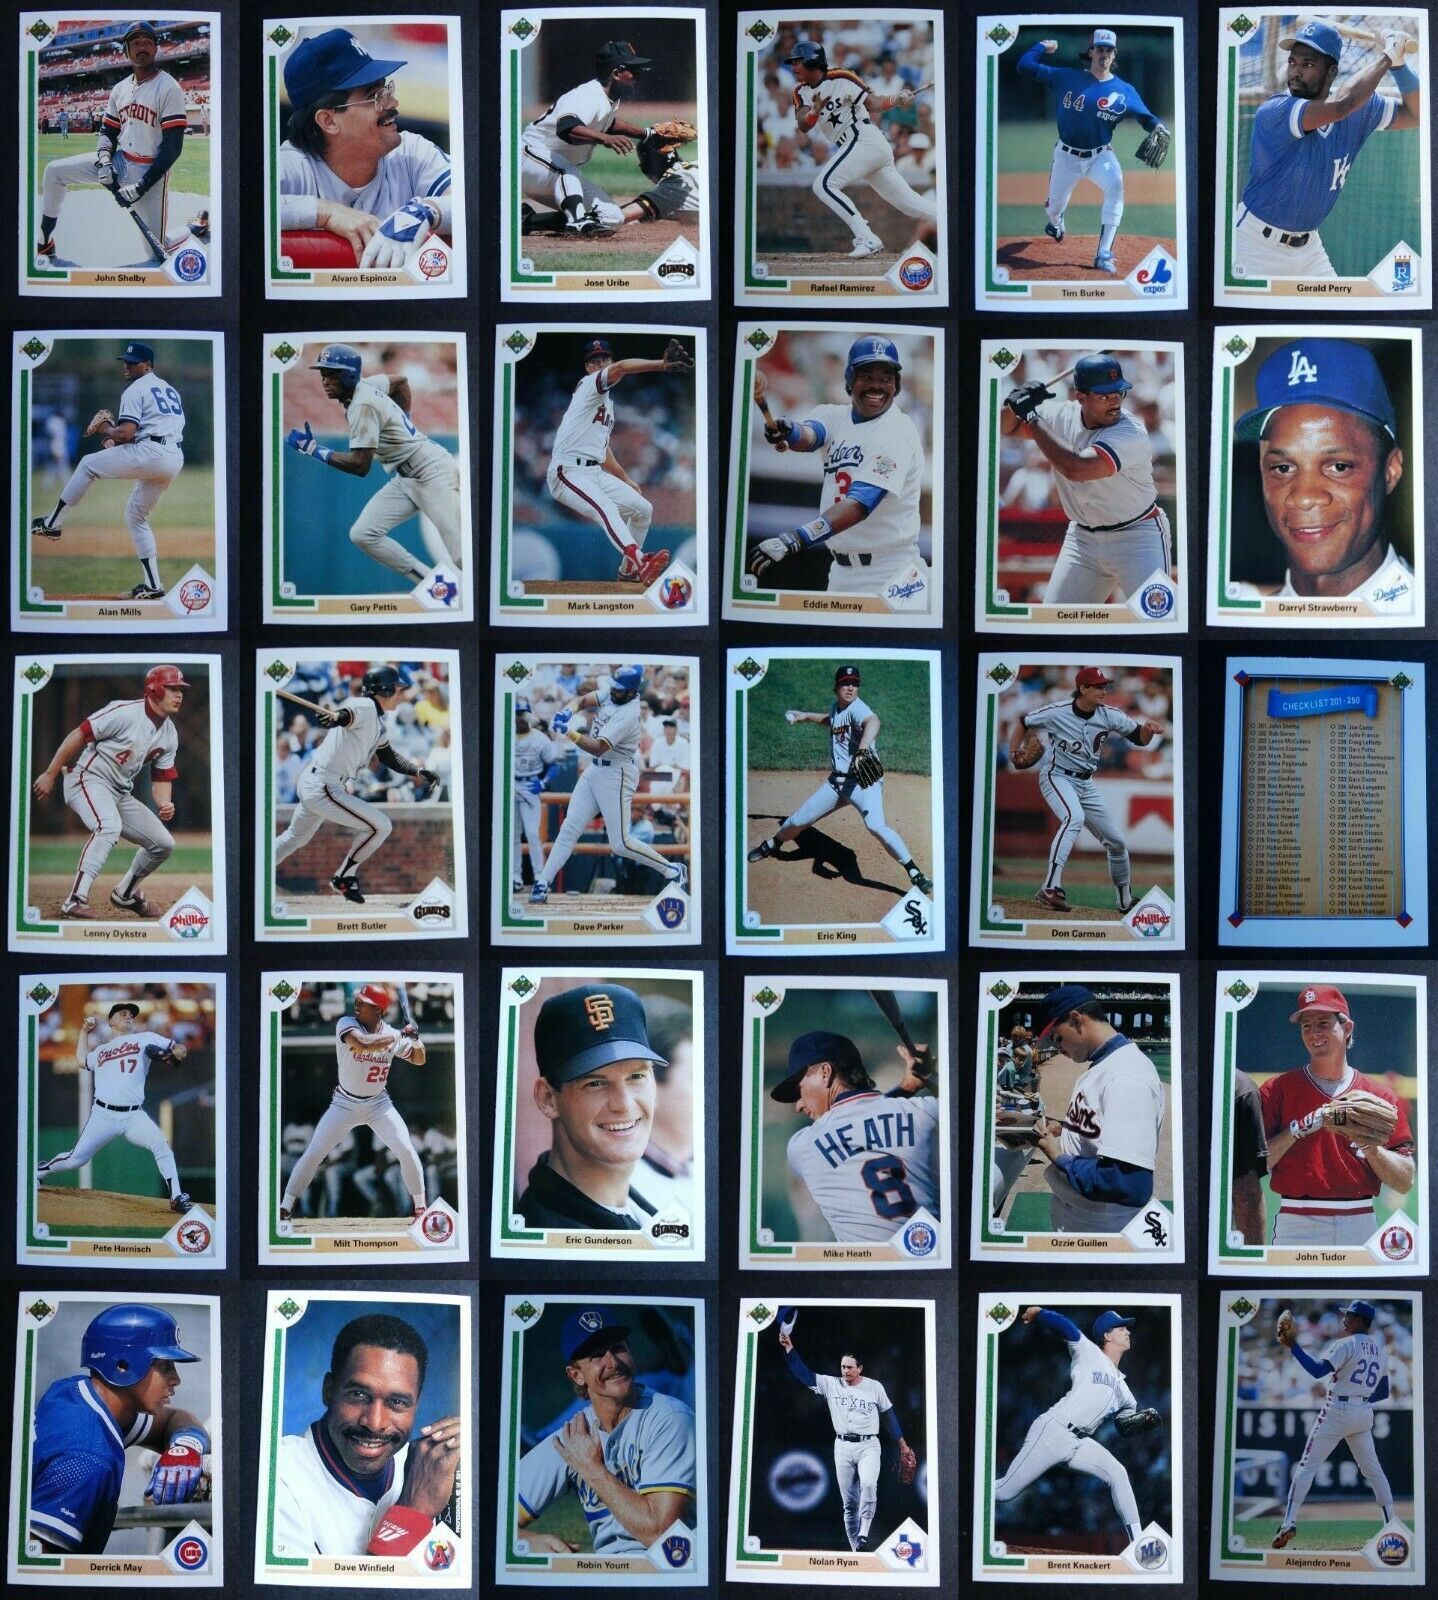 1994 Upper Deck # 286 LARRY WALKER Montreal Expos Baseball Card HOF Nice !